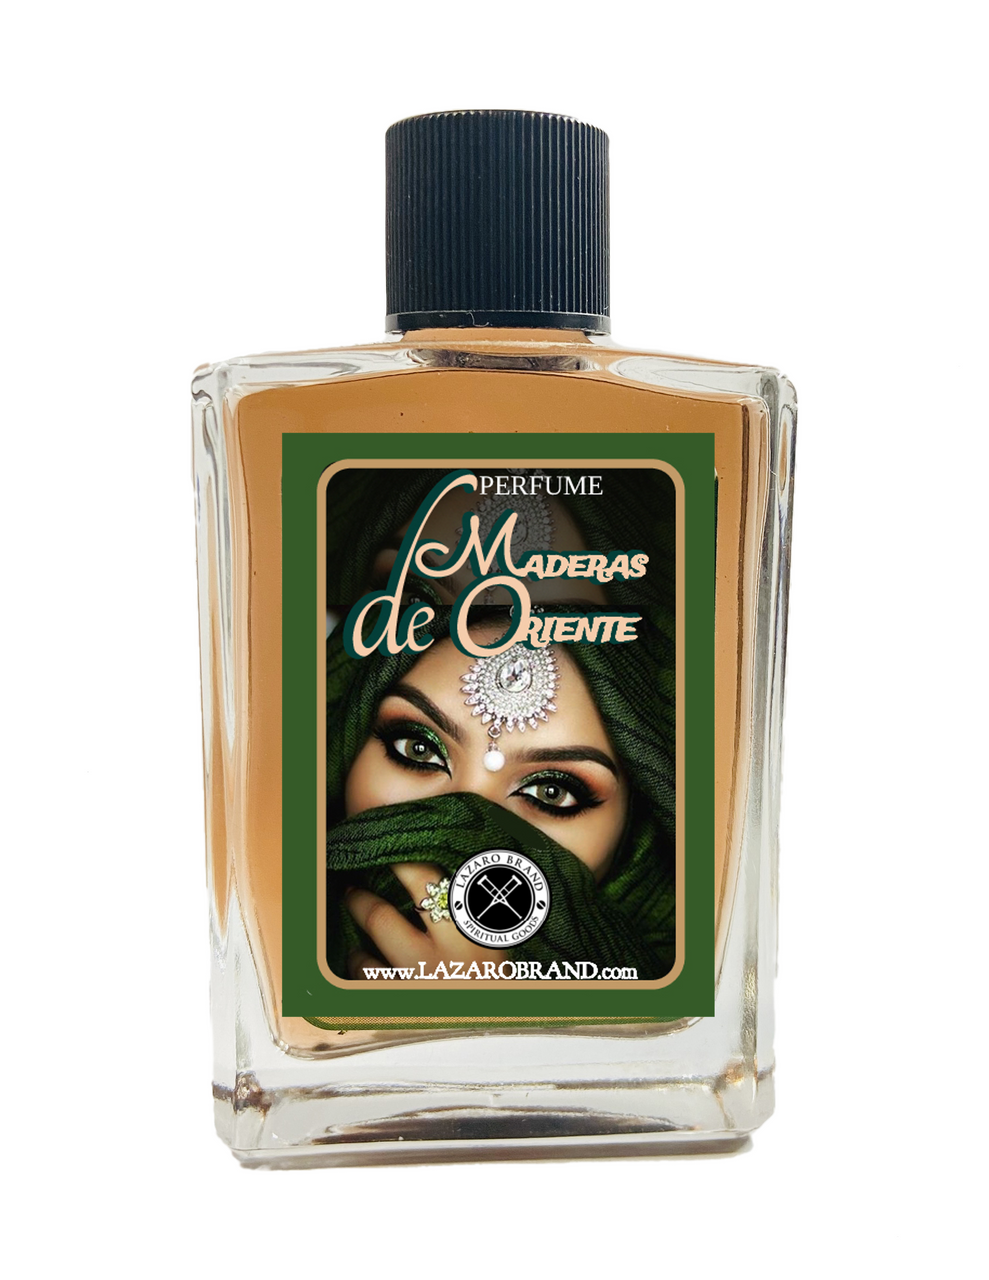 Maderas de Oriente by Myrurgia (Loción) » Reviews & Perfume Facts